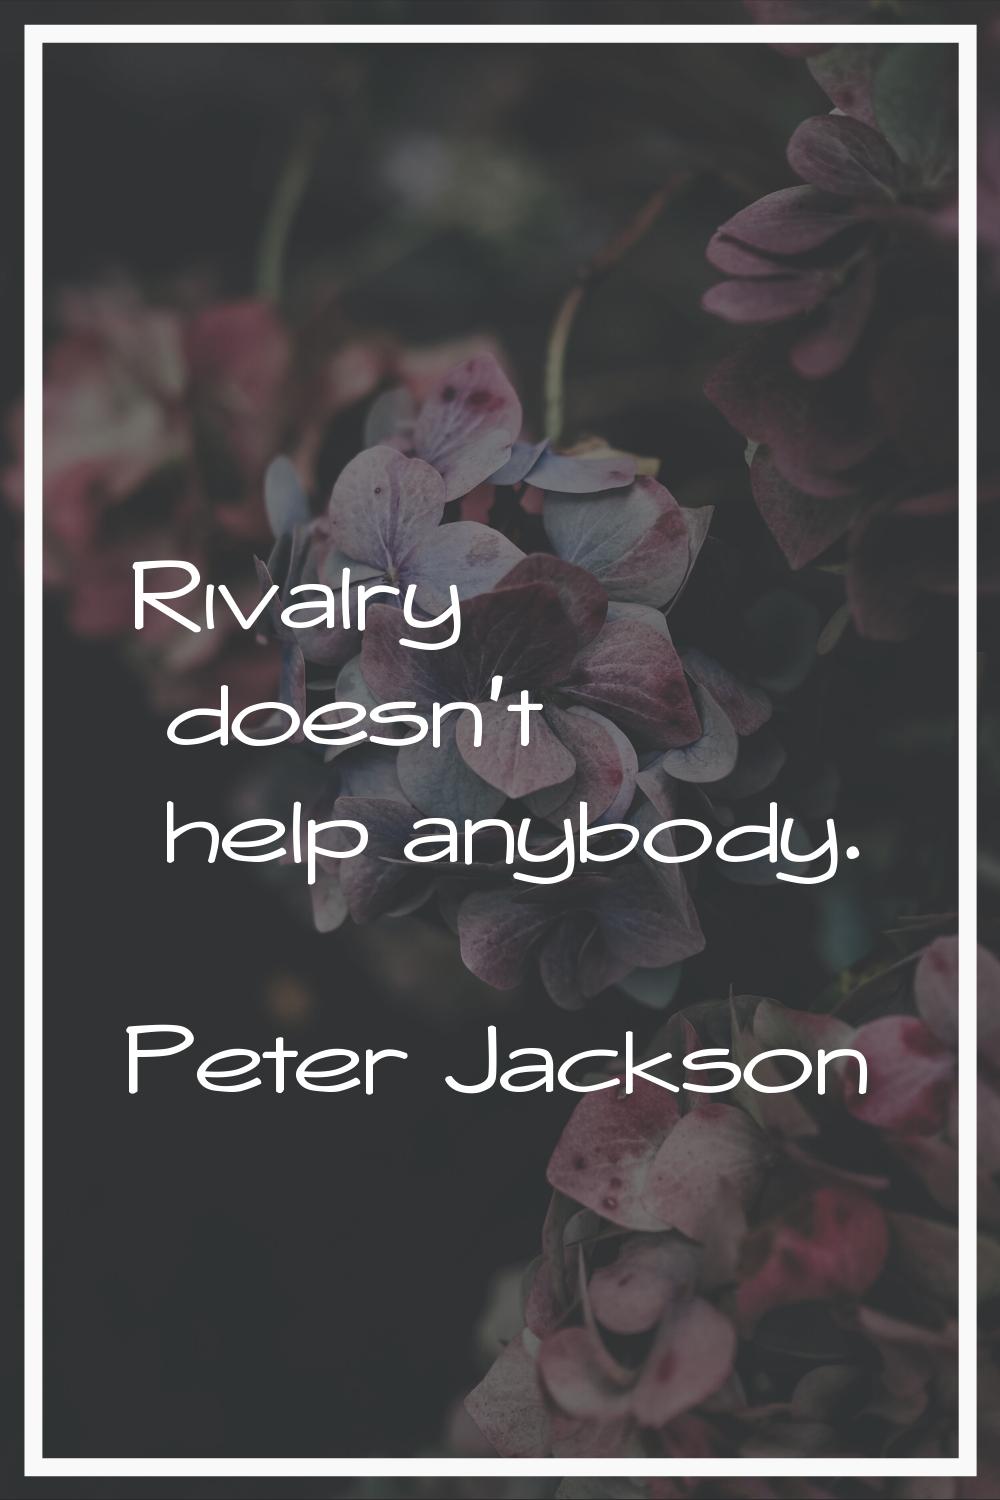 Rivalry doesn't help anybody.